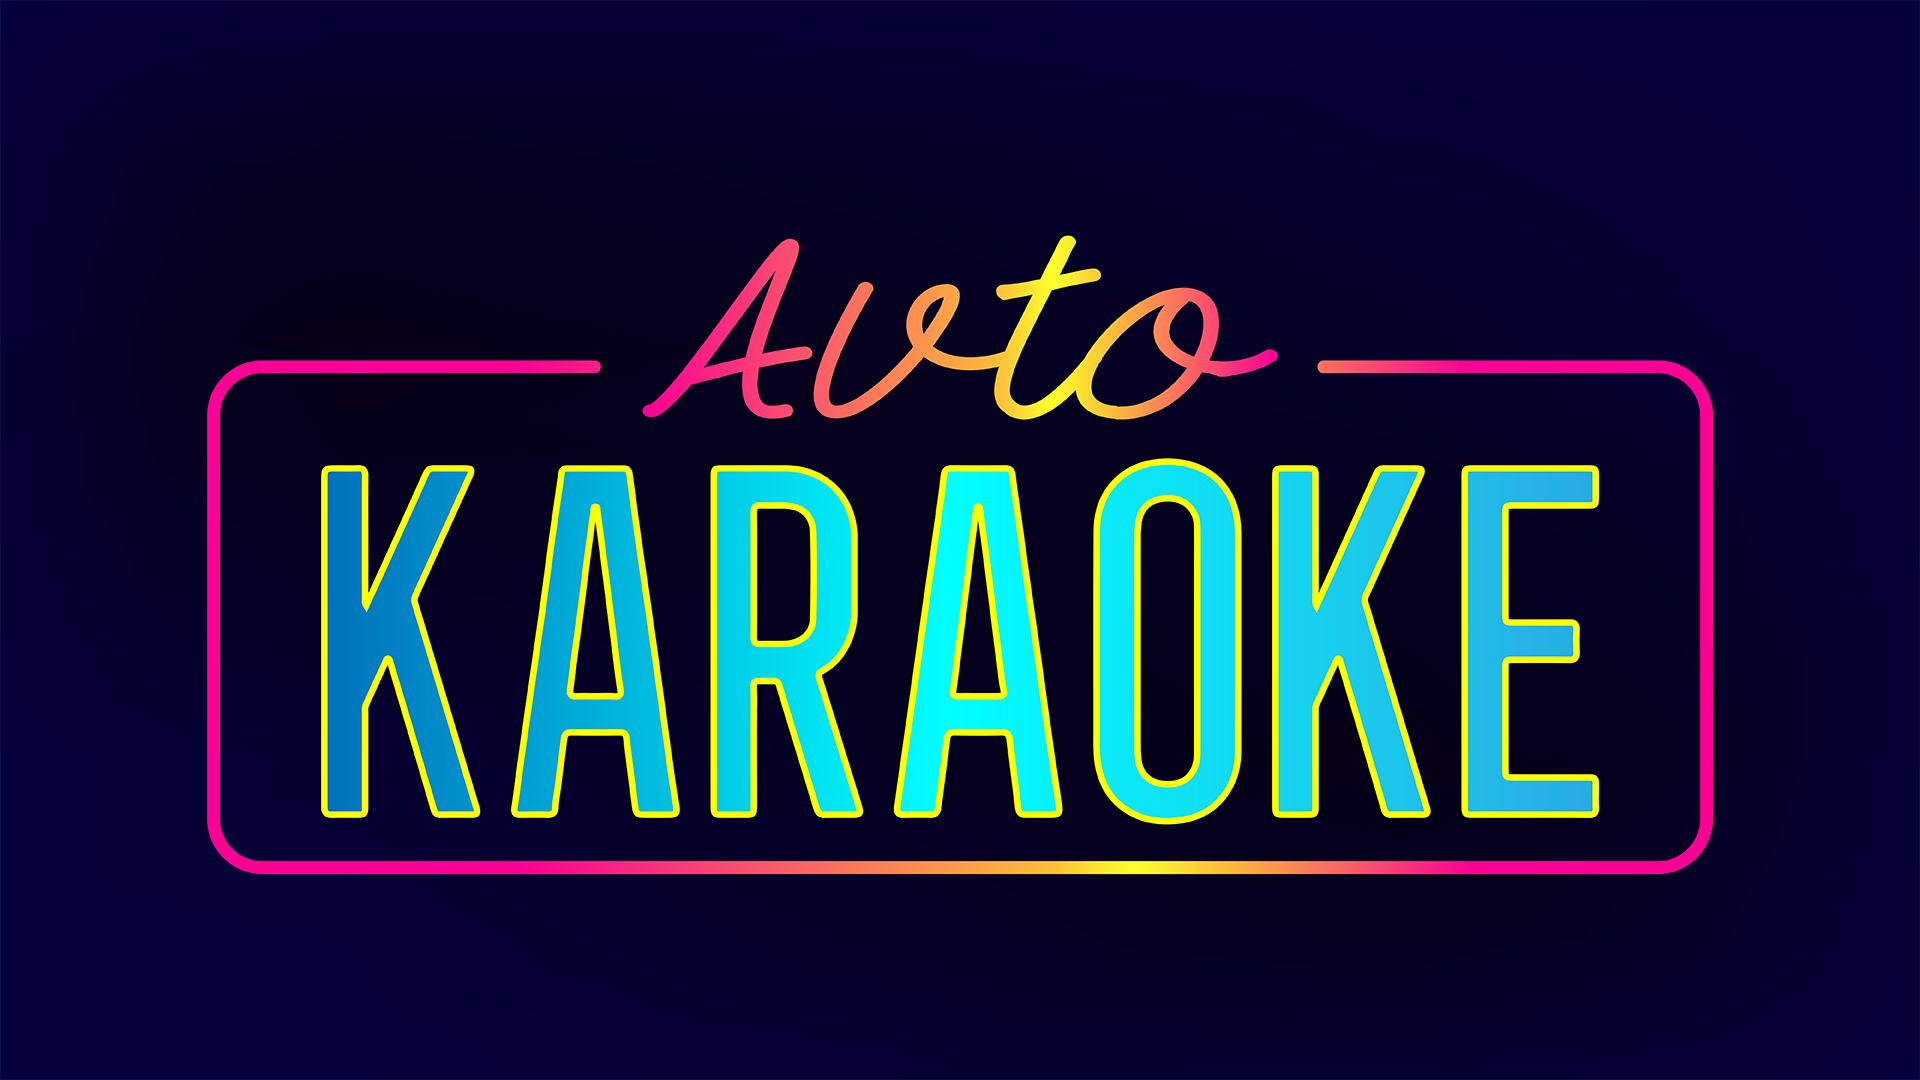 Karaoke-png 107789 - Avto Karaoke , HD Wallpaper & Backgrounds